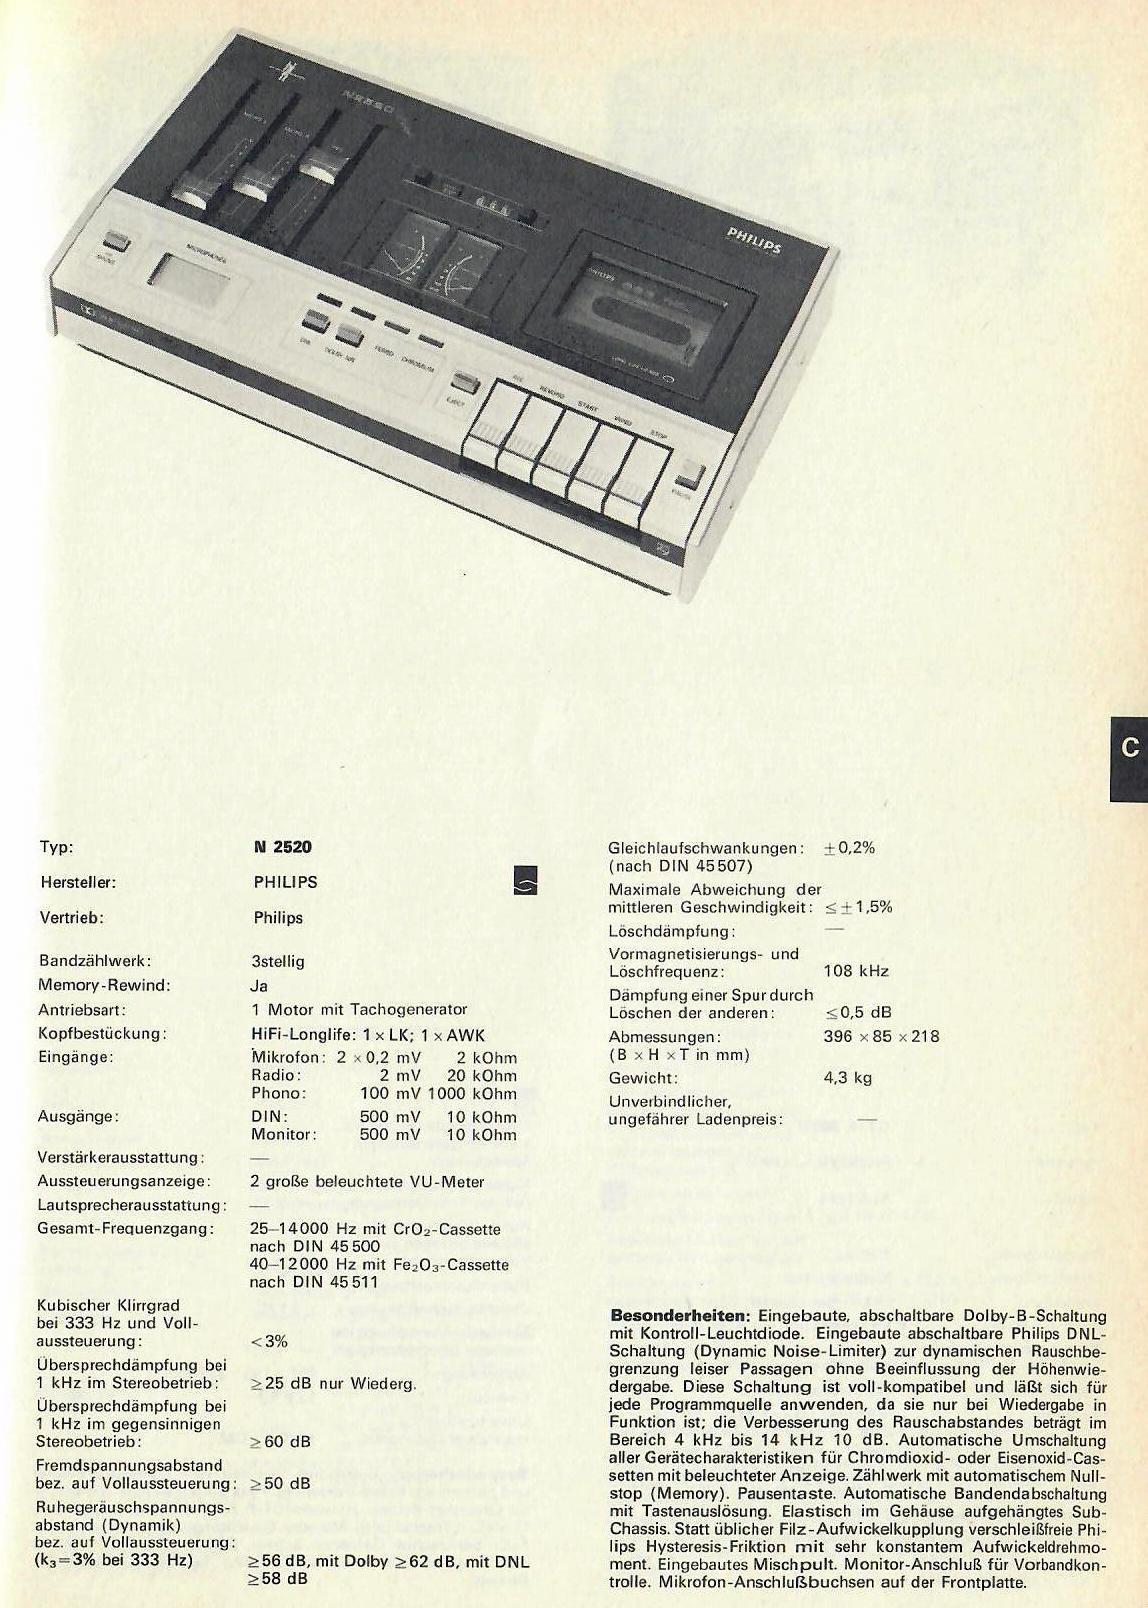 Philips N-2520-Daten.jpg